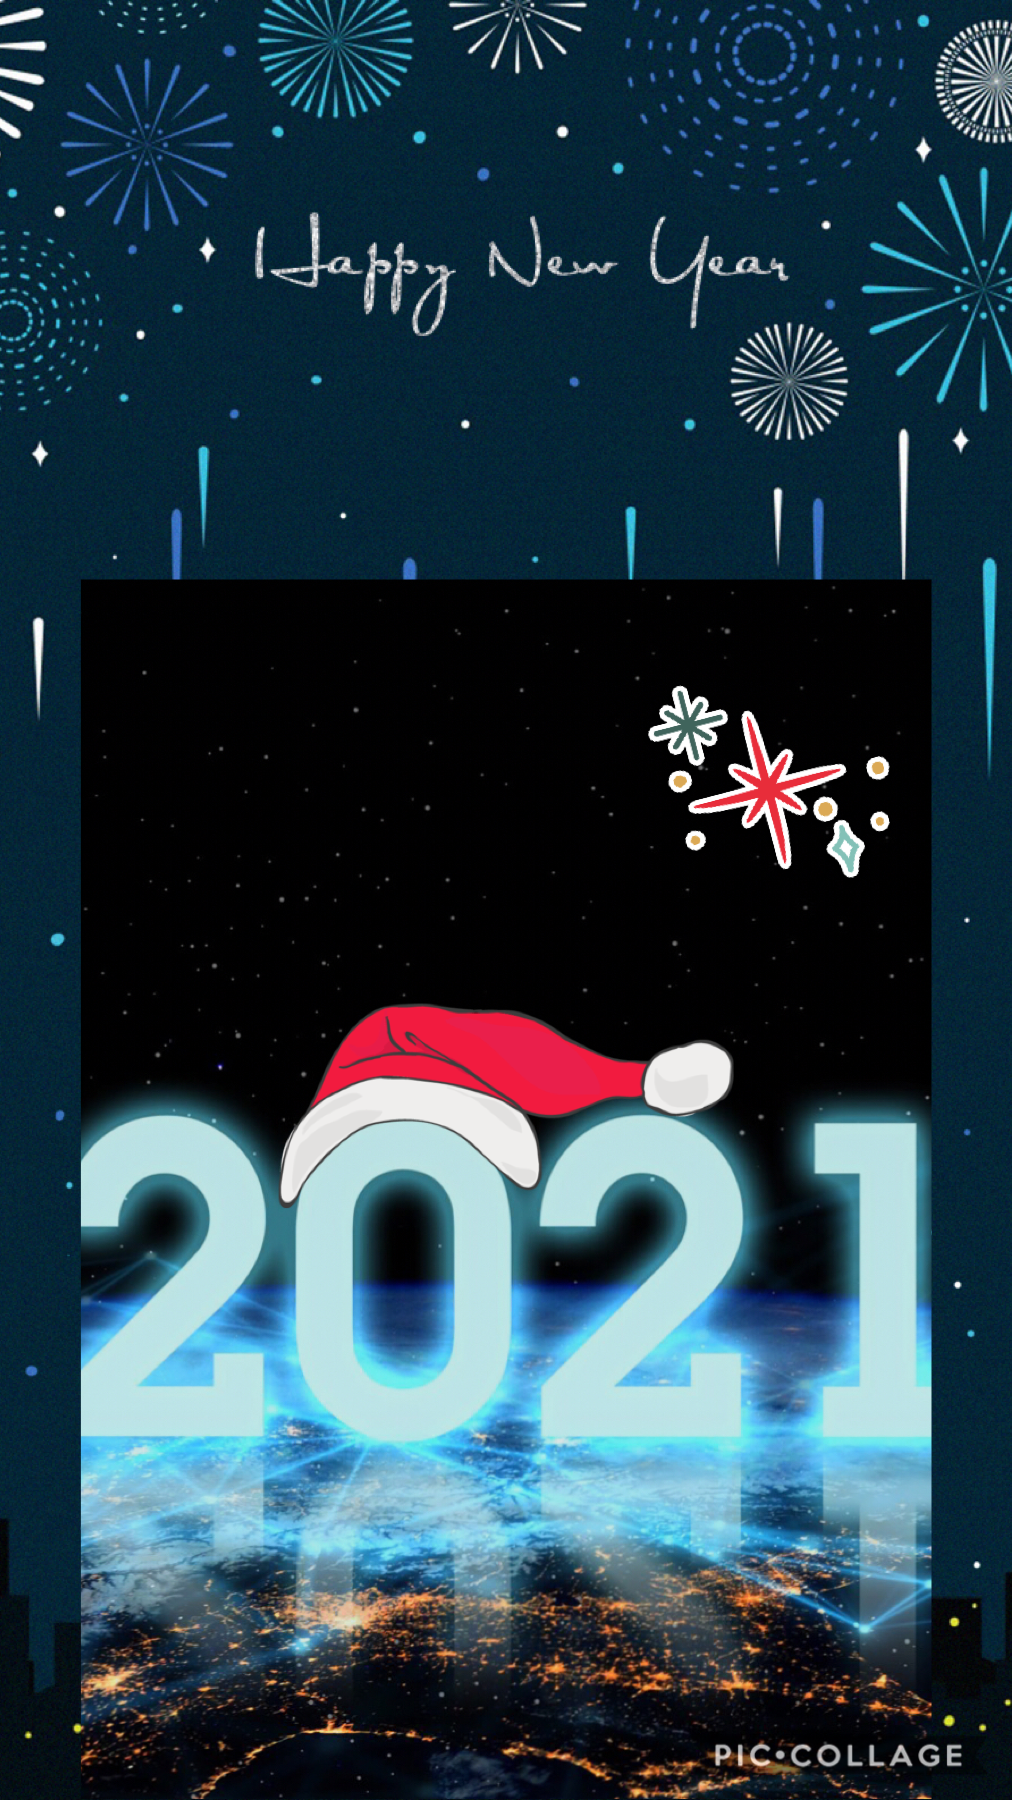 Yay!! Ot is 2021!!!

Hope you like it!